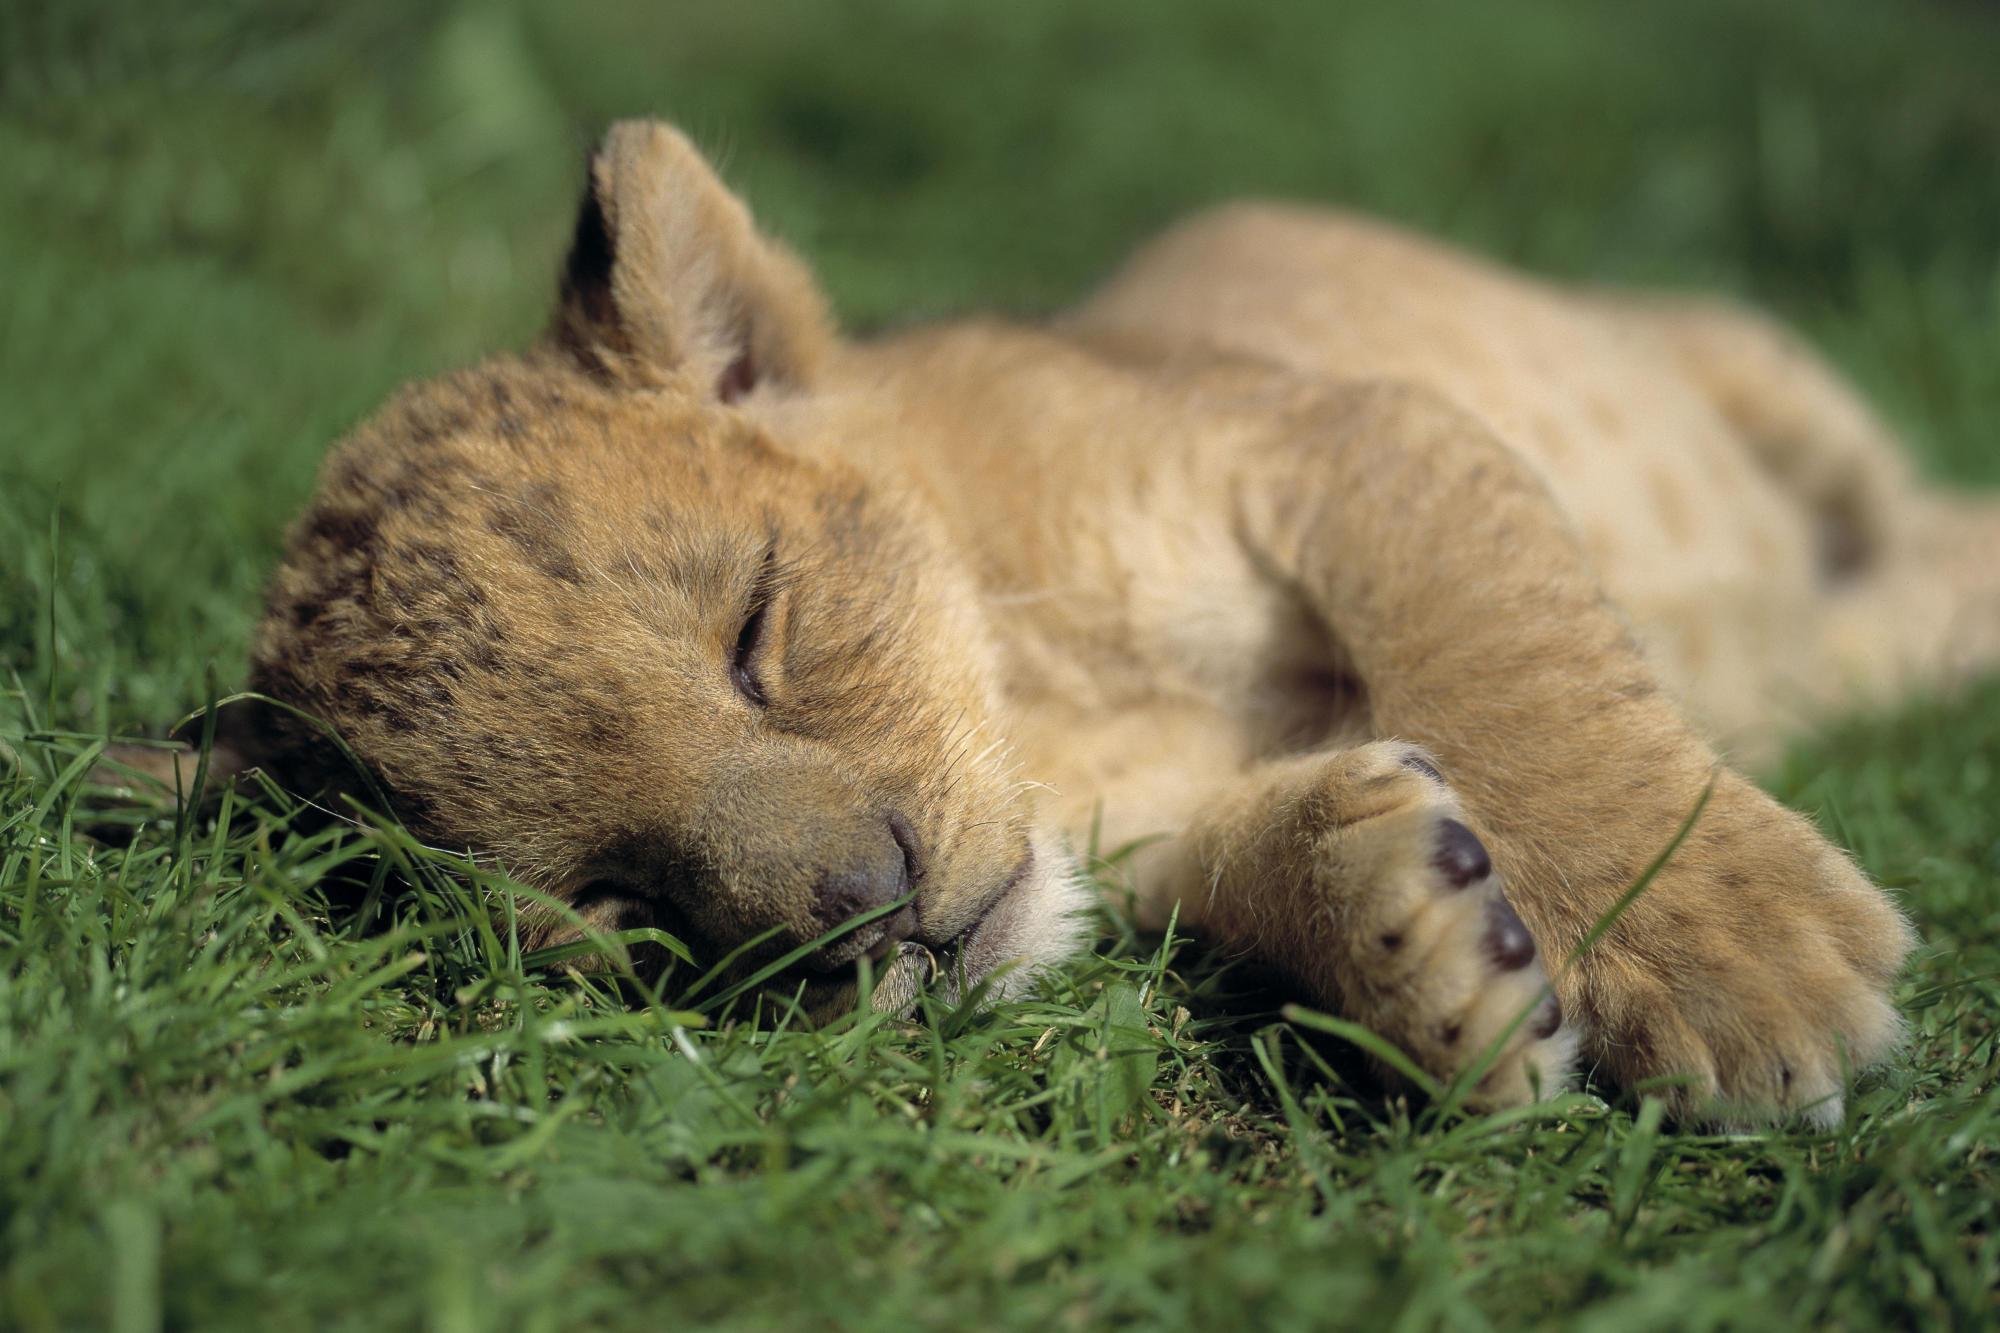 Foto: sovende løve